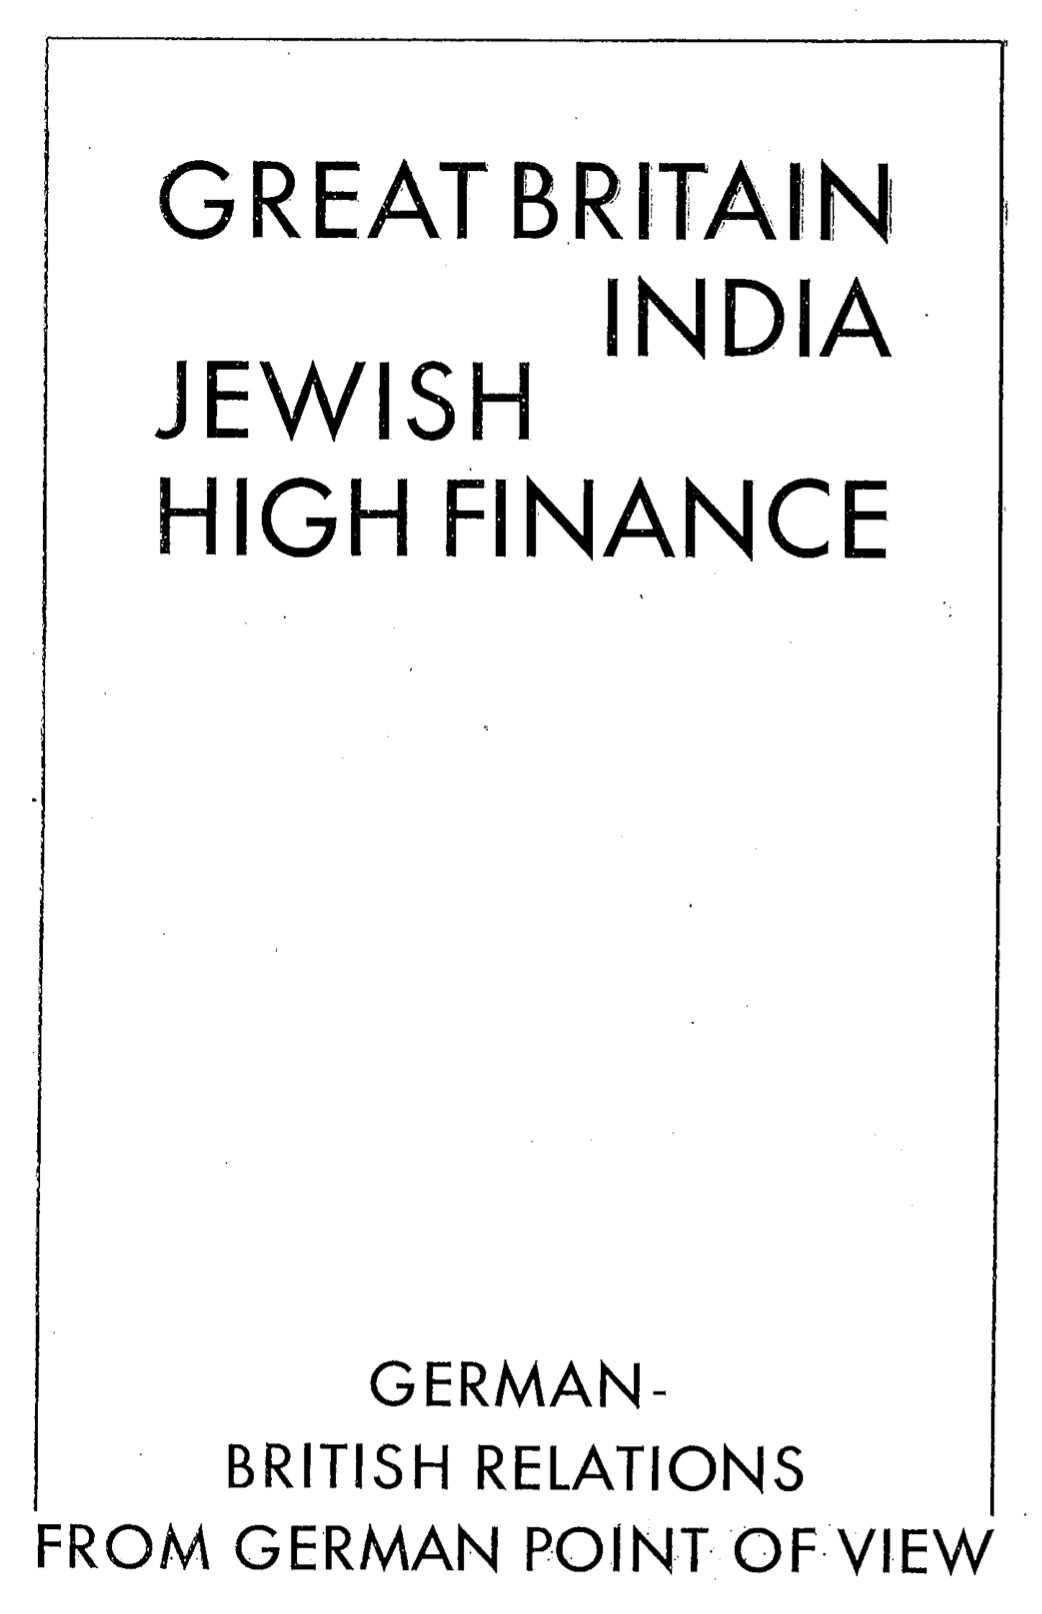 GB India Jewish High Finance (1930)